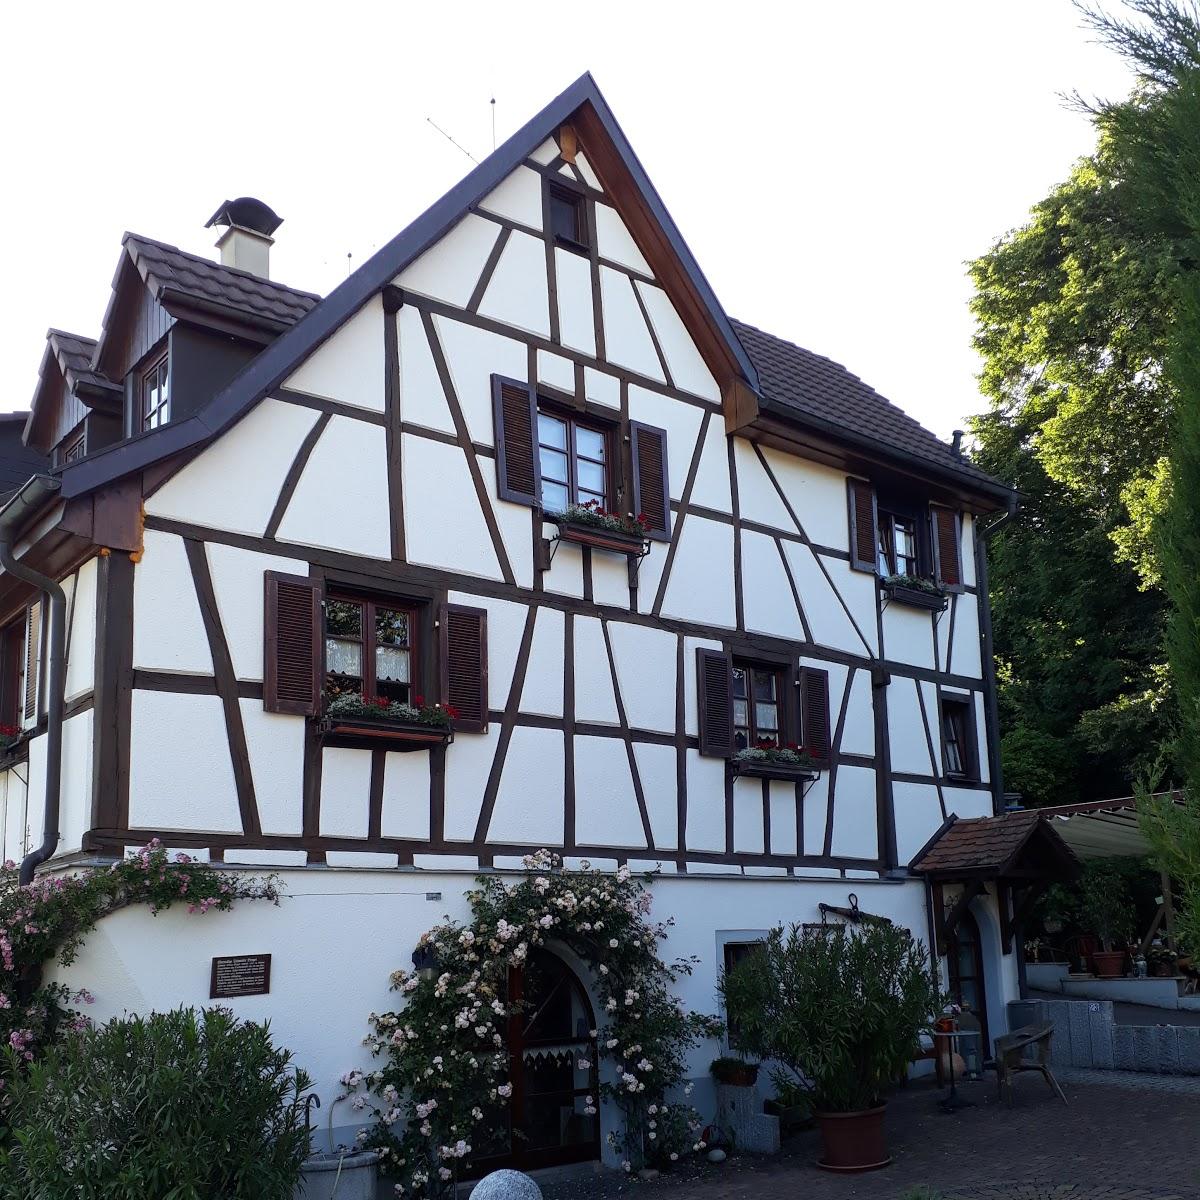 Restaurant "Hotel Sonja (Garni)" in  Bellingen